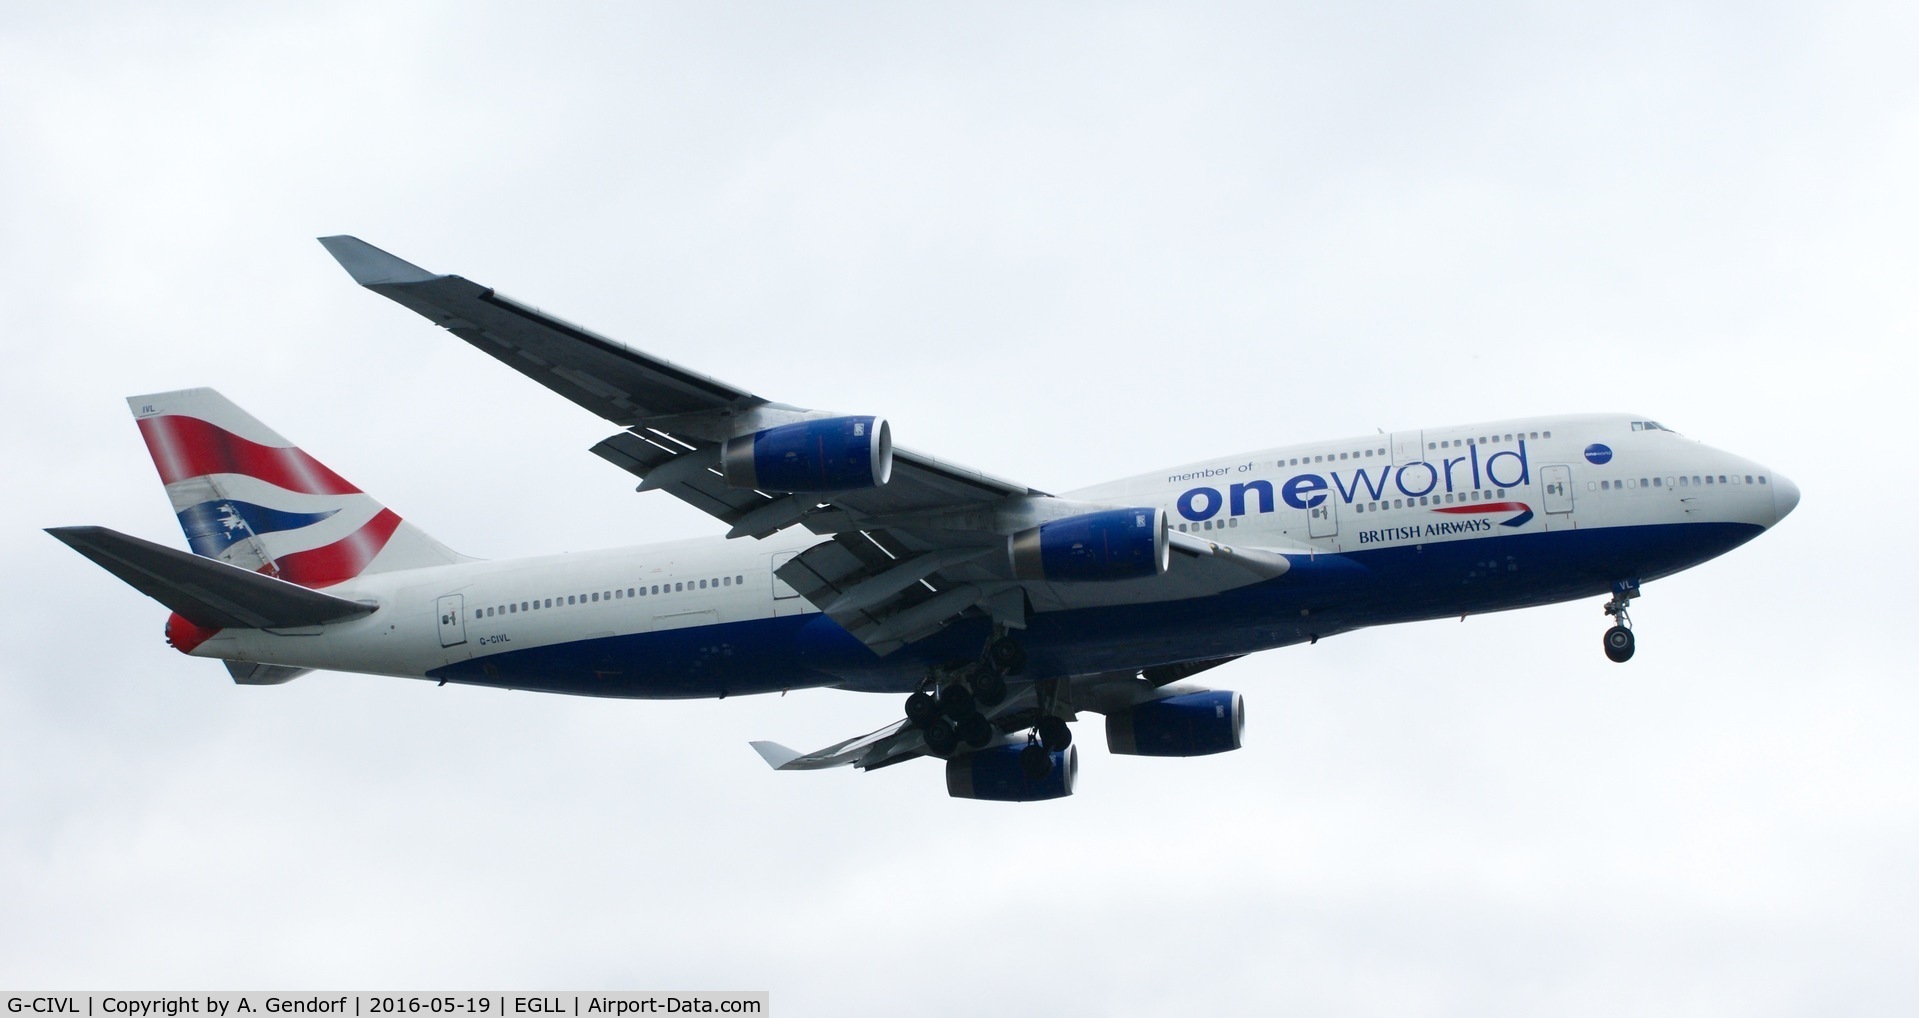 G-CIVL, 1997 Boeing 747-436 C/N 27478, British Airways (One World ttl.), is here approaching RWY 27R at London Heathrow(EGLL)